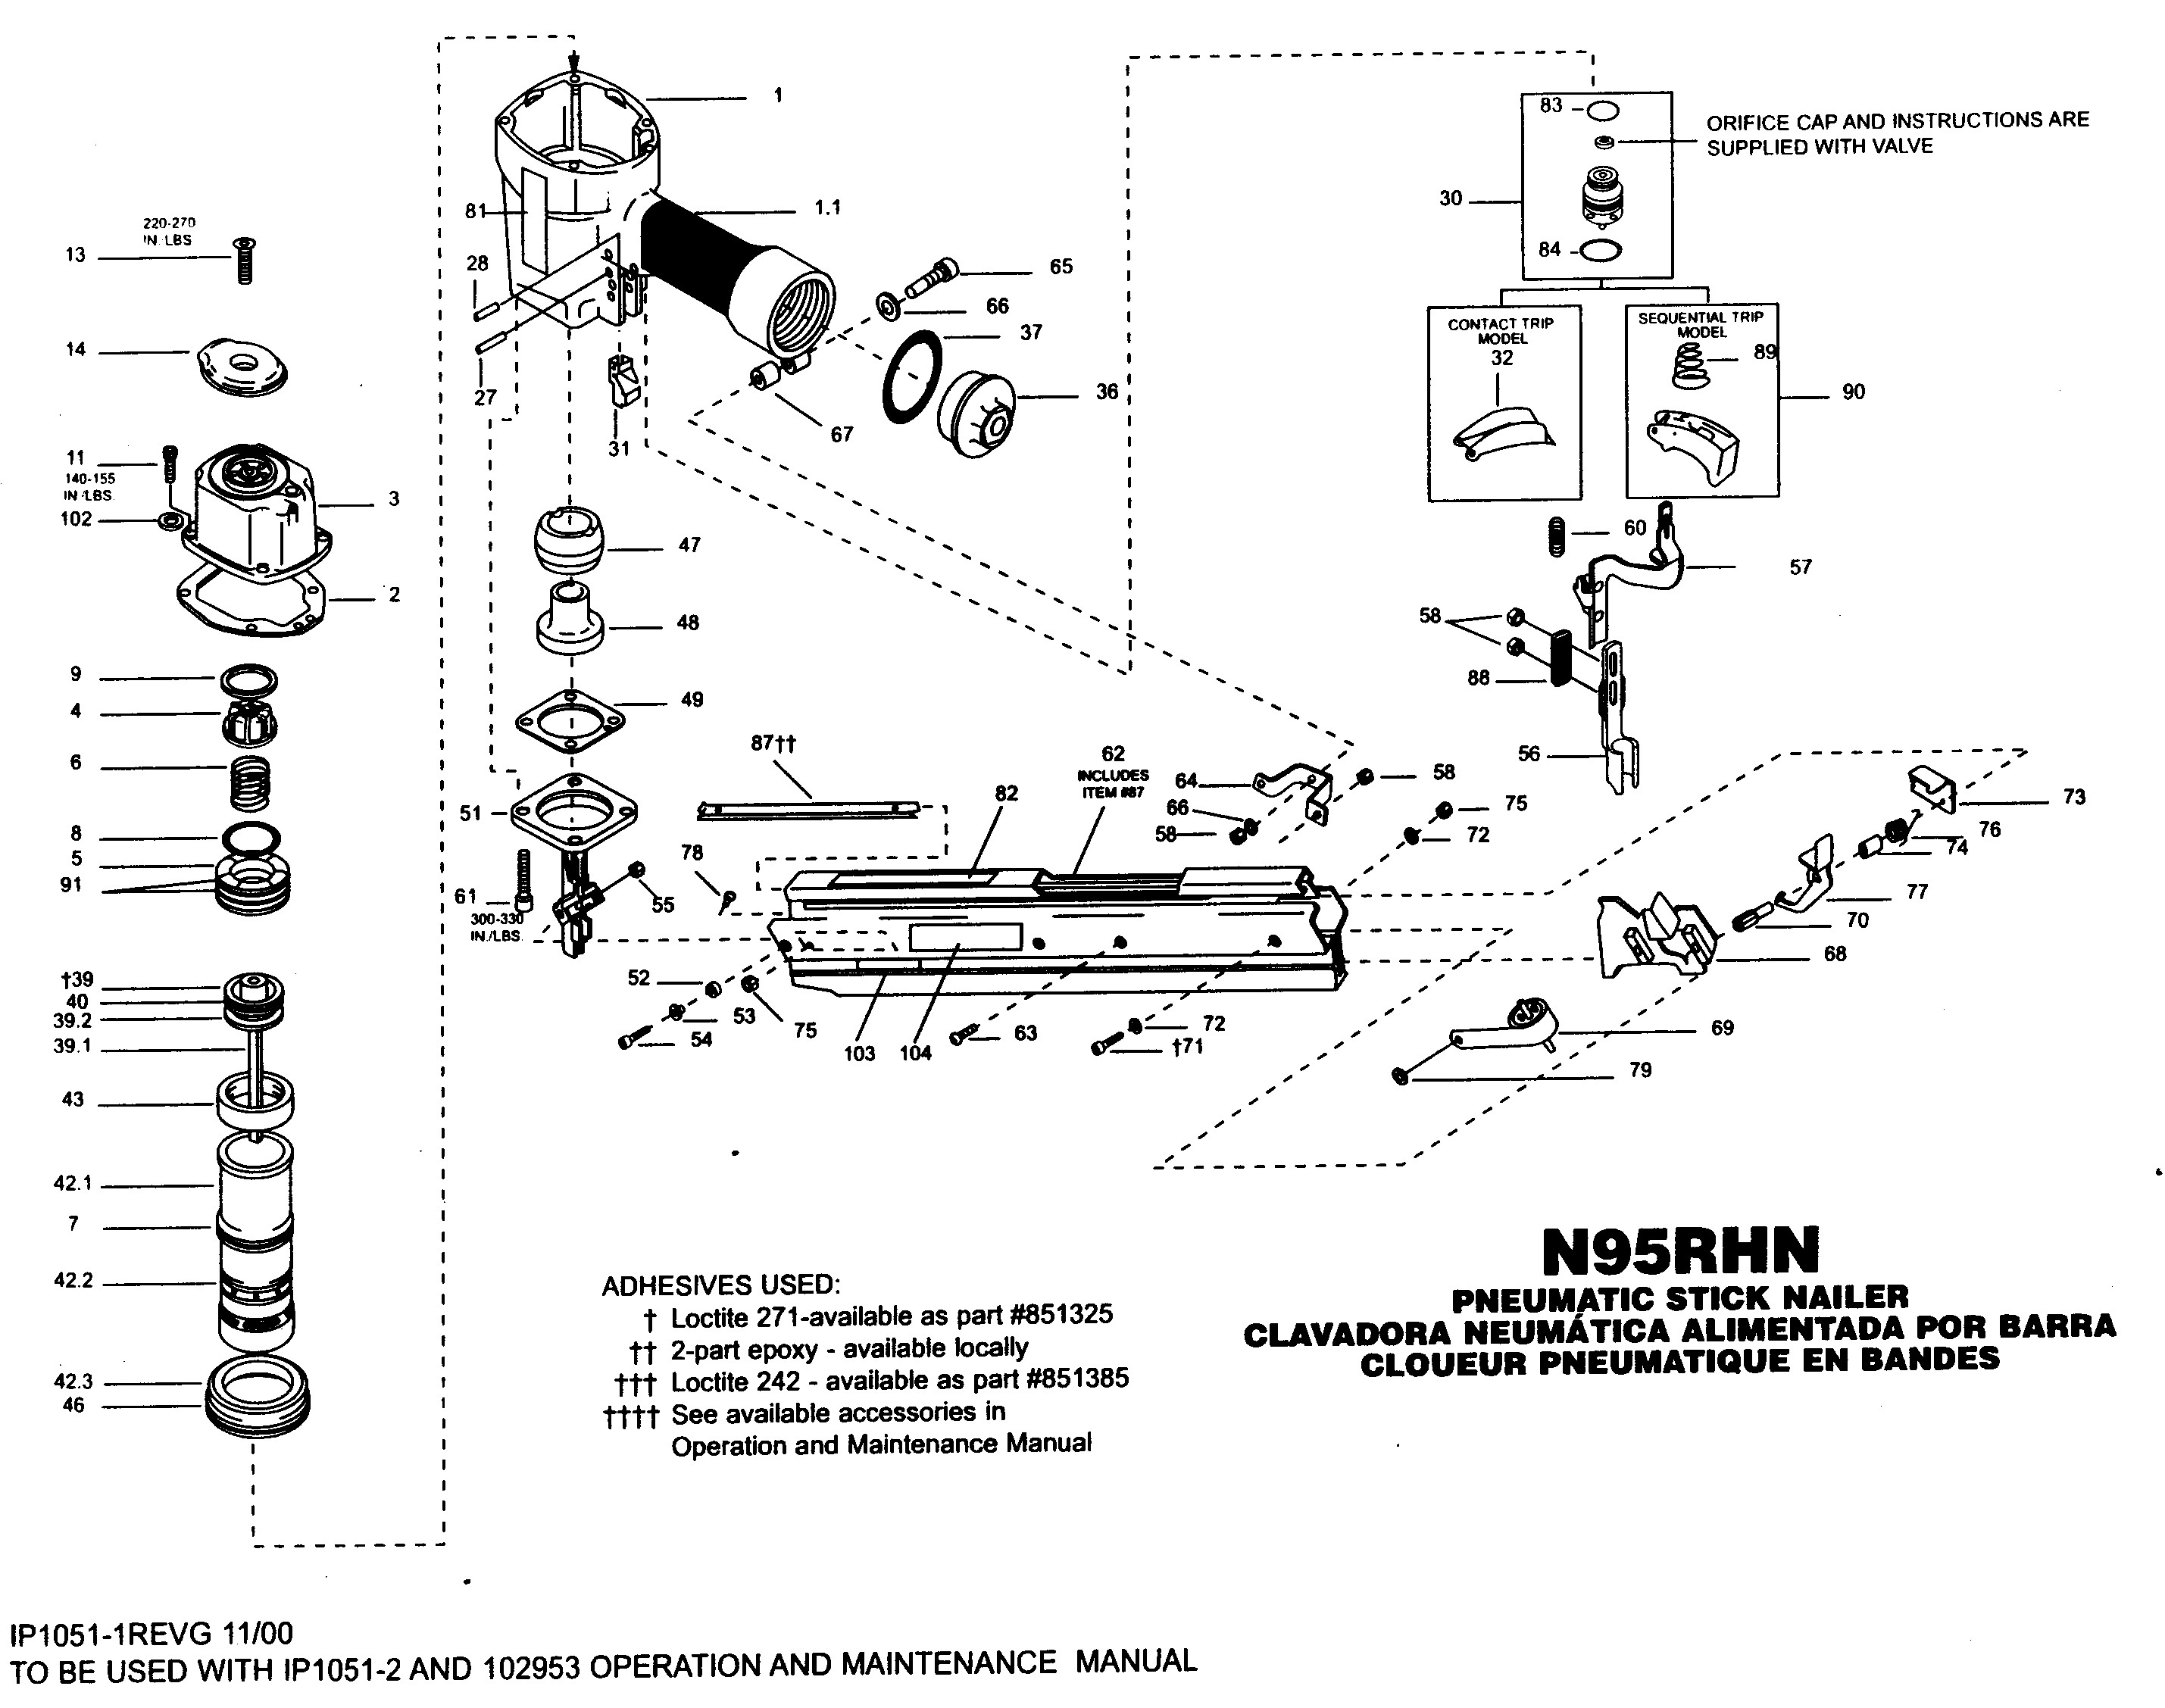 Bostitch Air Compressor Parts Diagram Looking for Stanley Bostitch Model N95rhn Power Nailer Repair Of Bostitch Air Compressor Parts Diagram